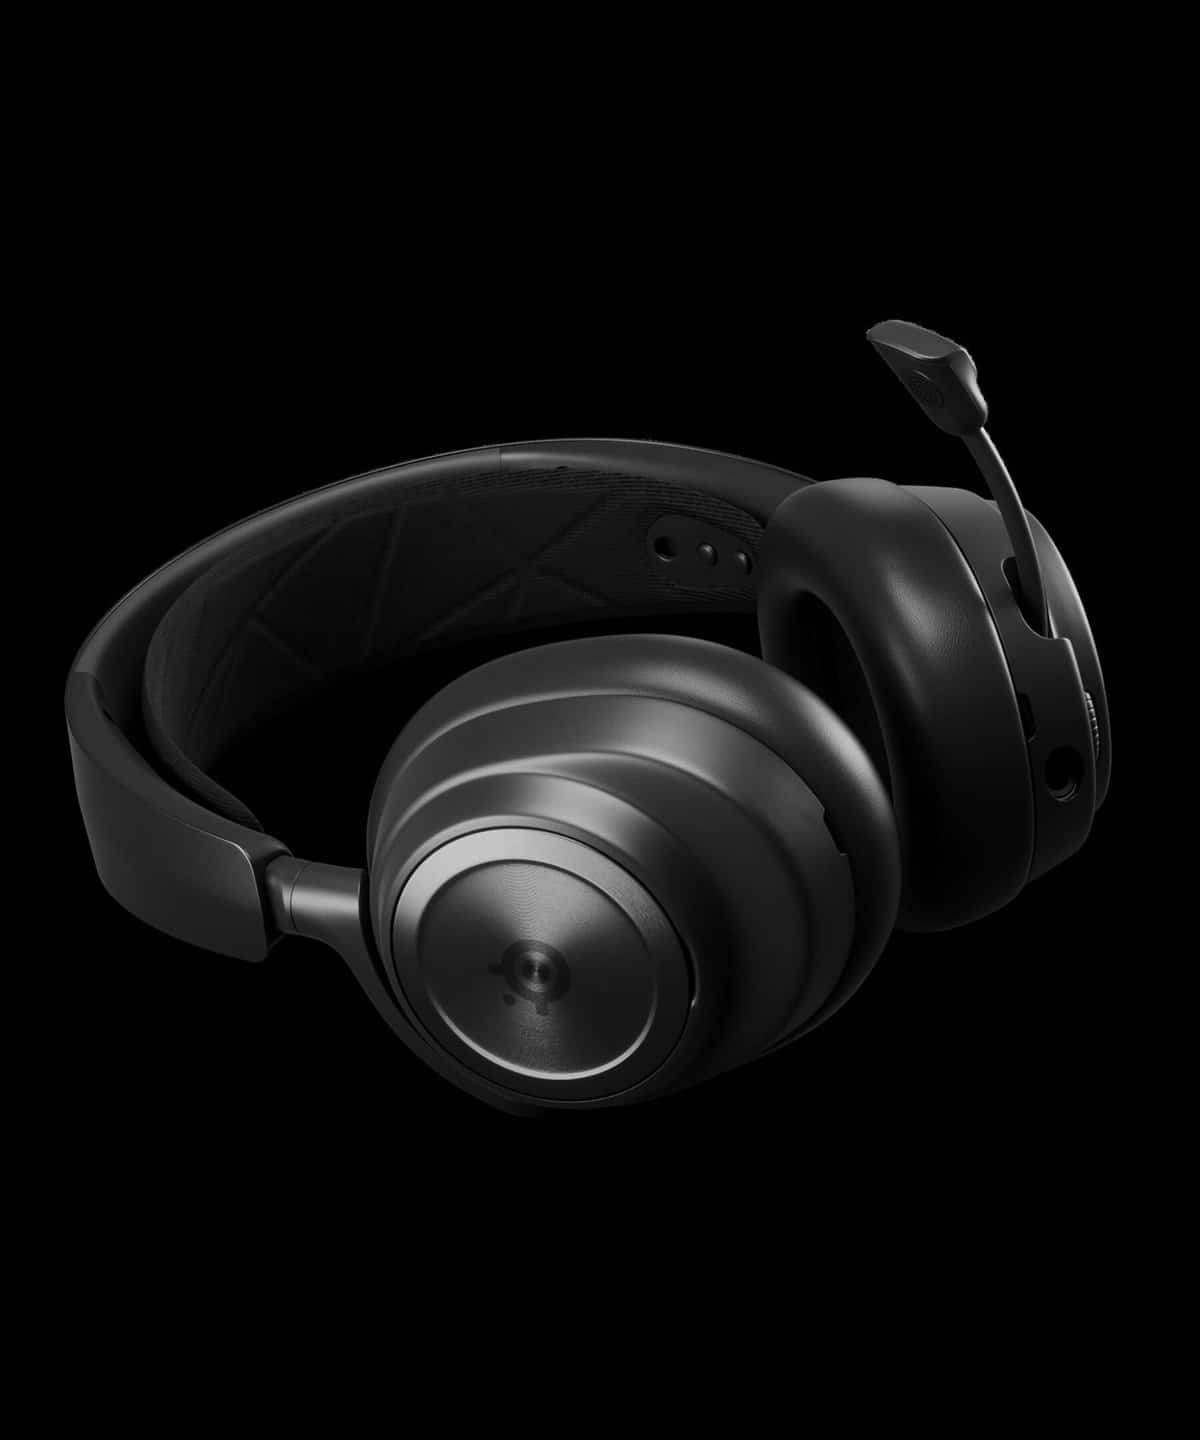 Best overall headset for Modern Warfare - SteelSeries Arctis Pro Wireless Headset